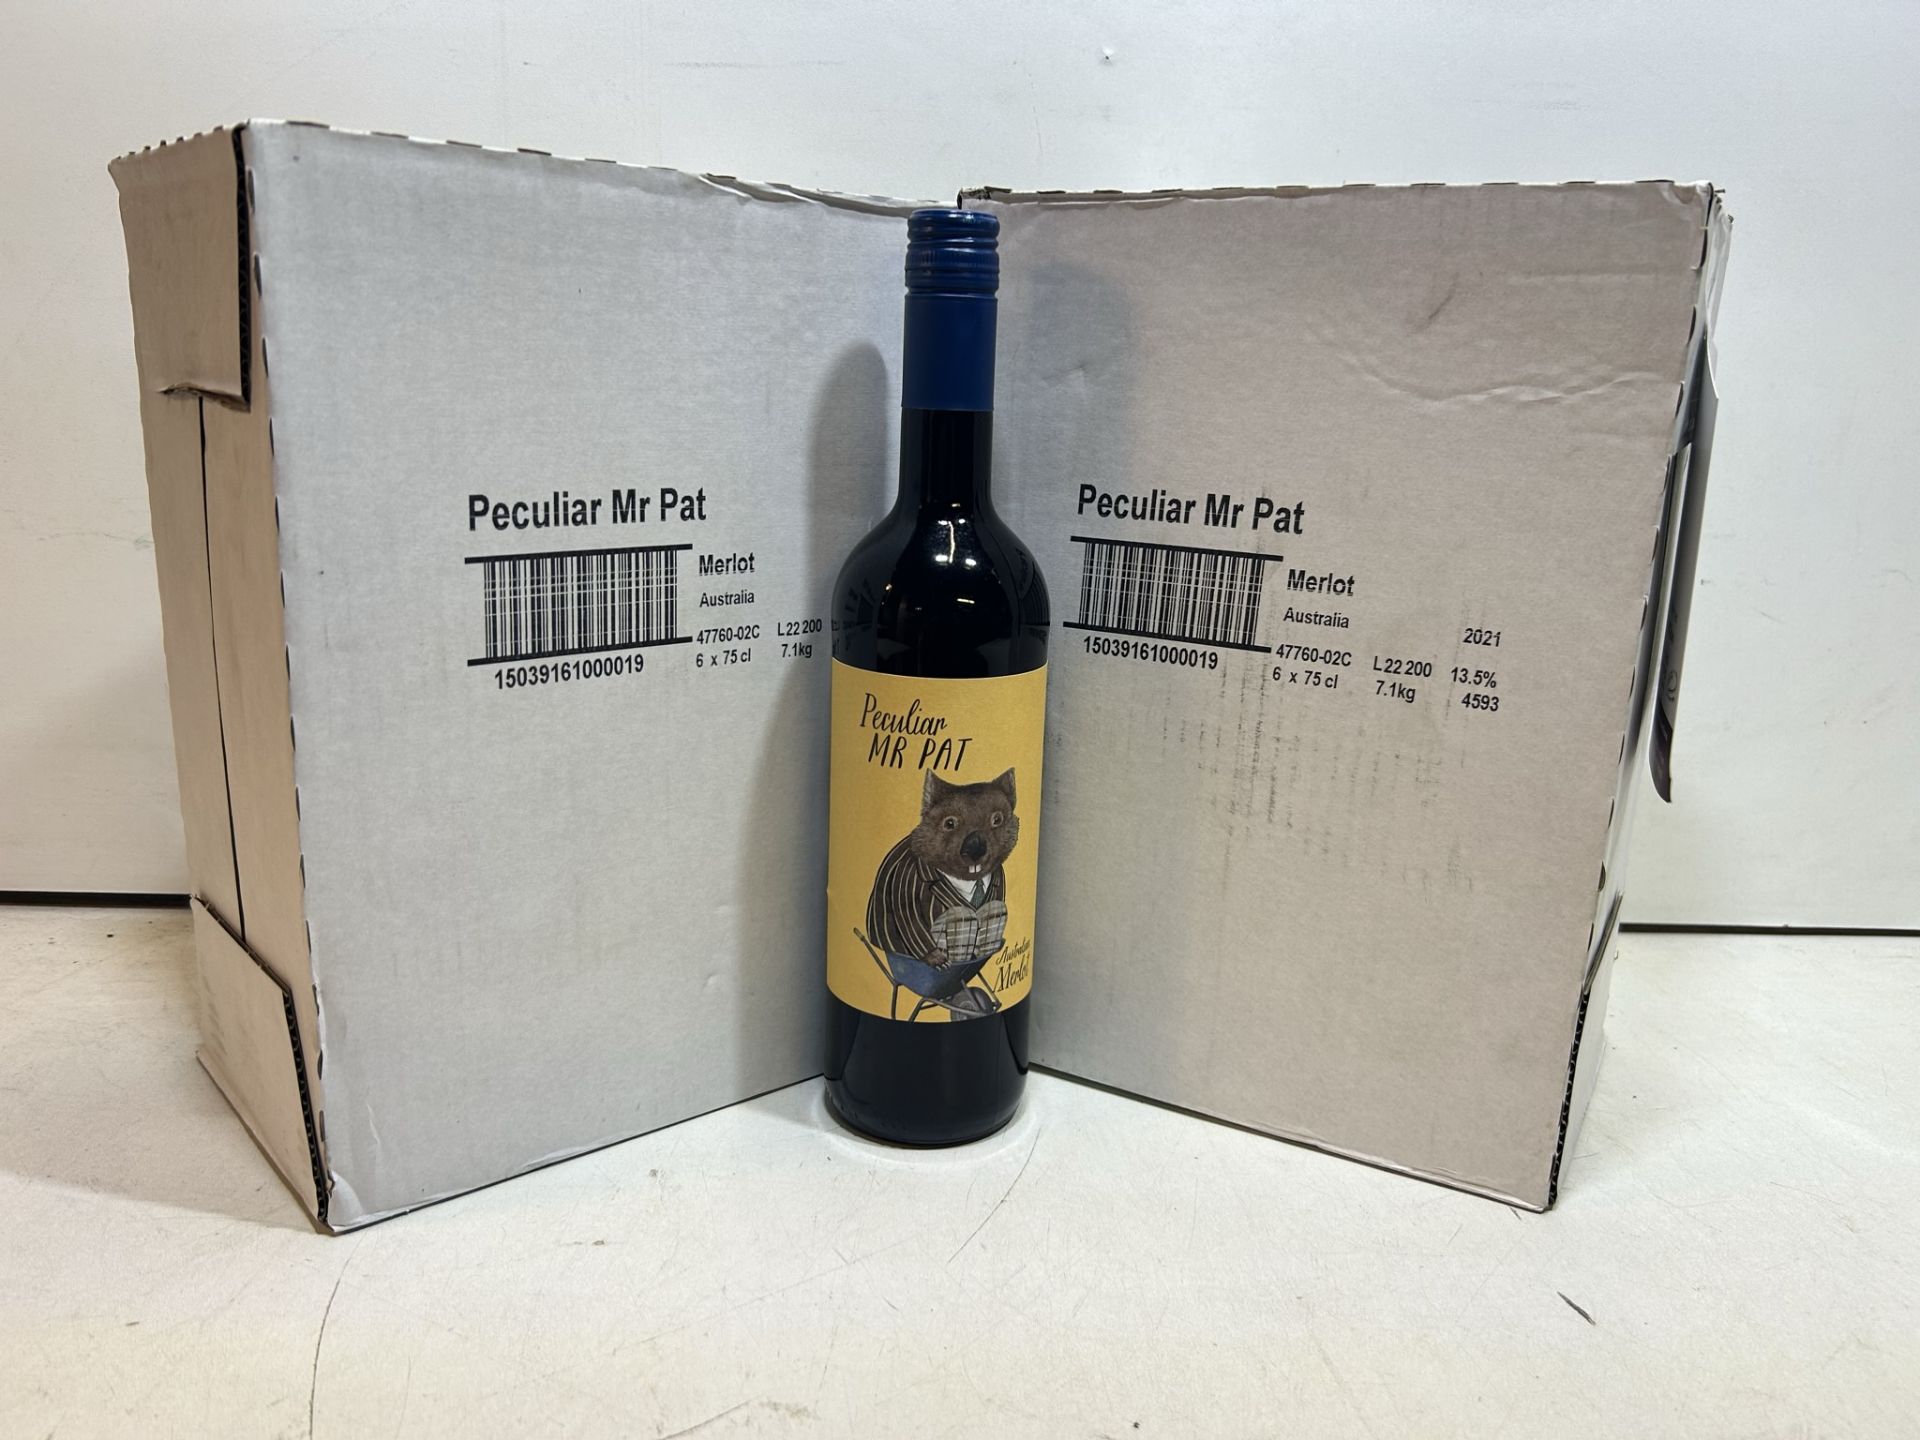 2 x Crates of Peculiar Mr Pat Australian Merlot Wine & 12 x Loose Bottles (24 x Bottles in Total)